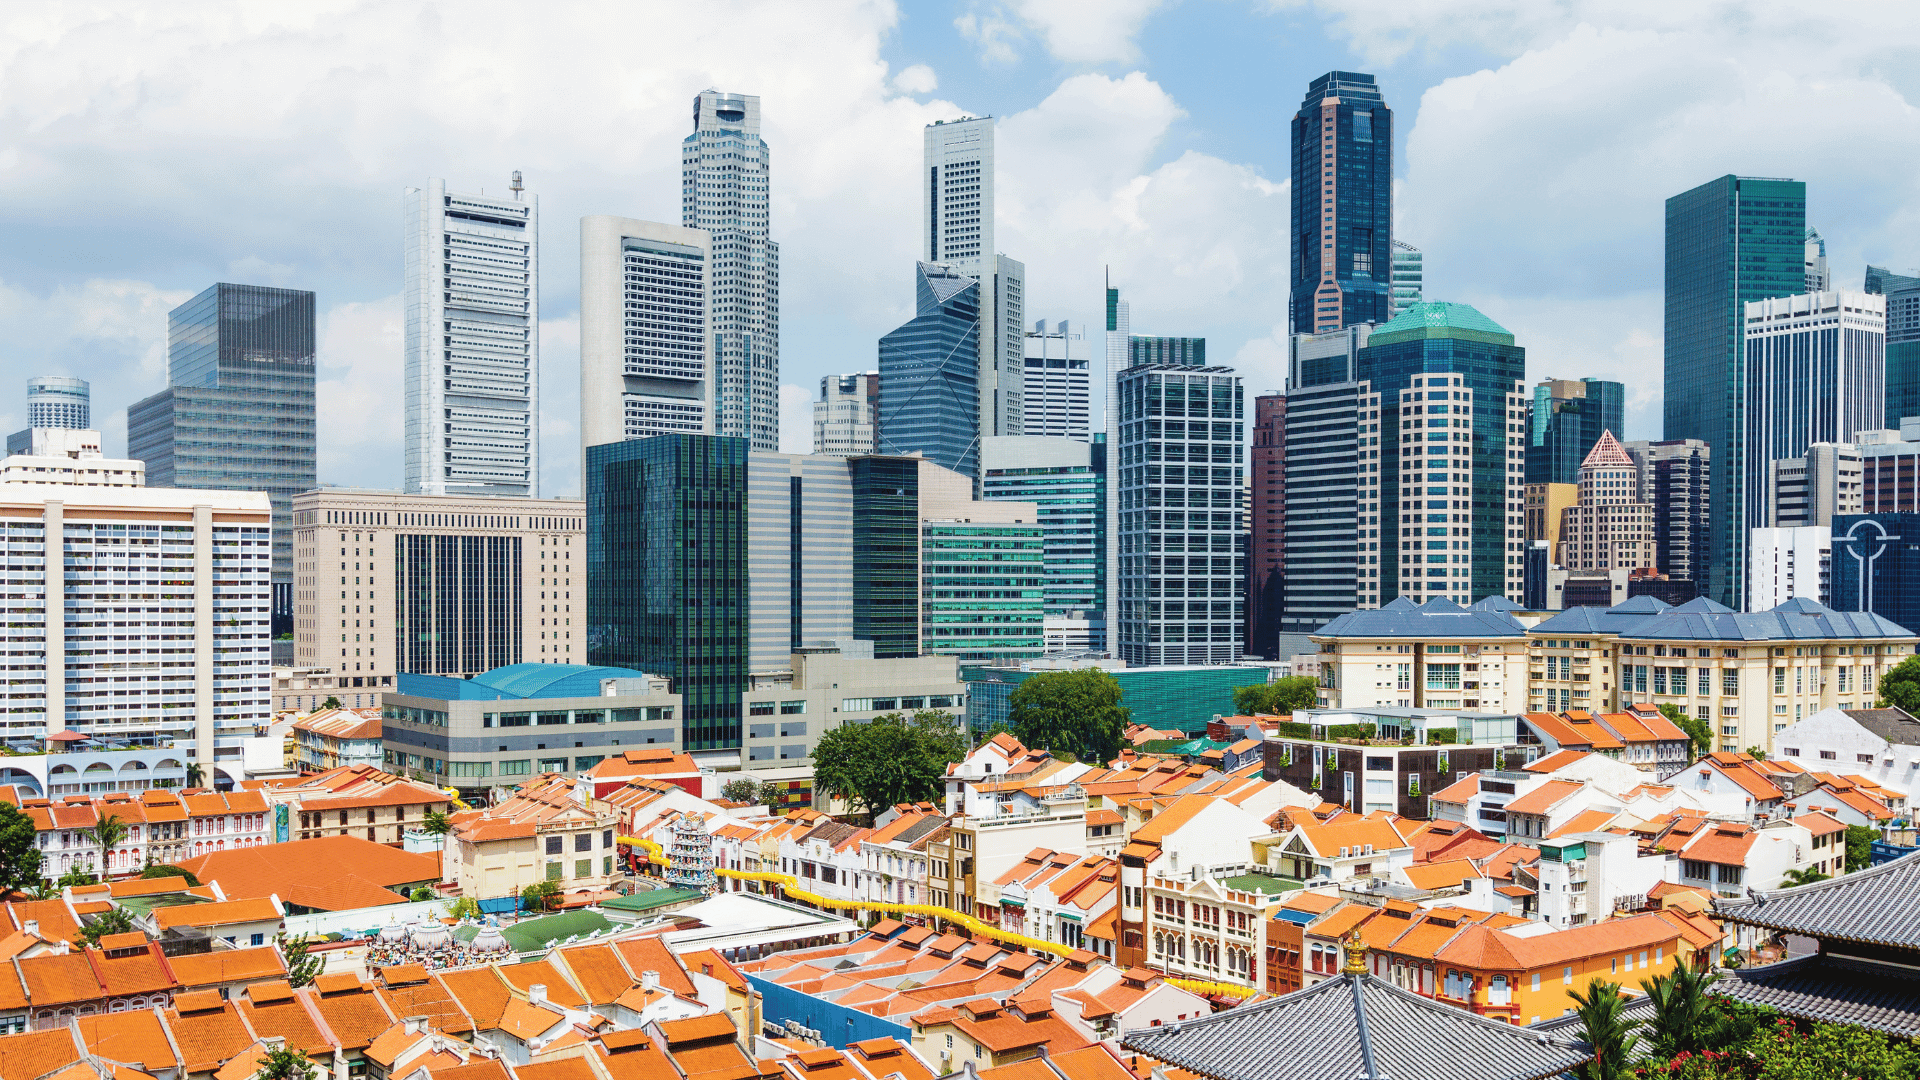 Singapore Property